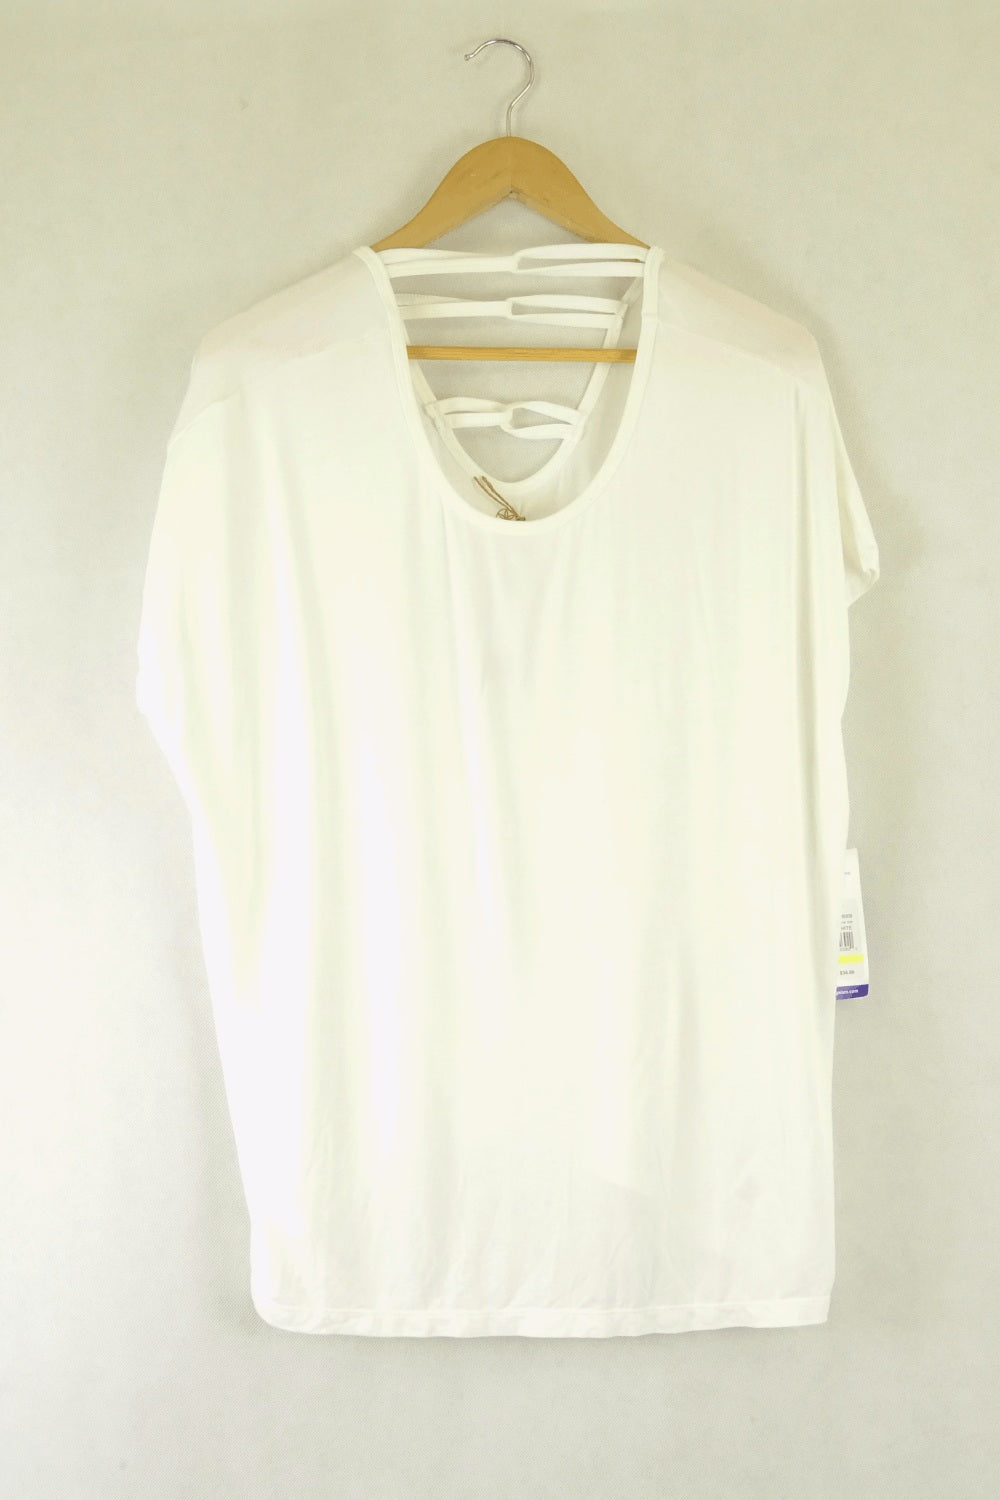 Gaiam White T-Shirt L - Reluv Clothing Australia